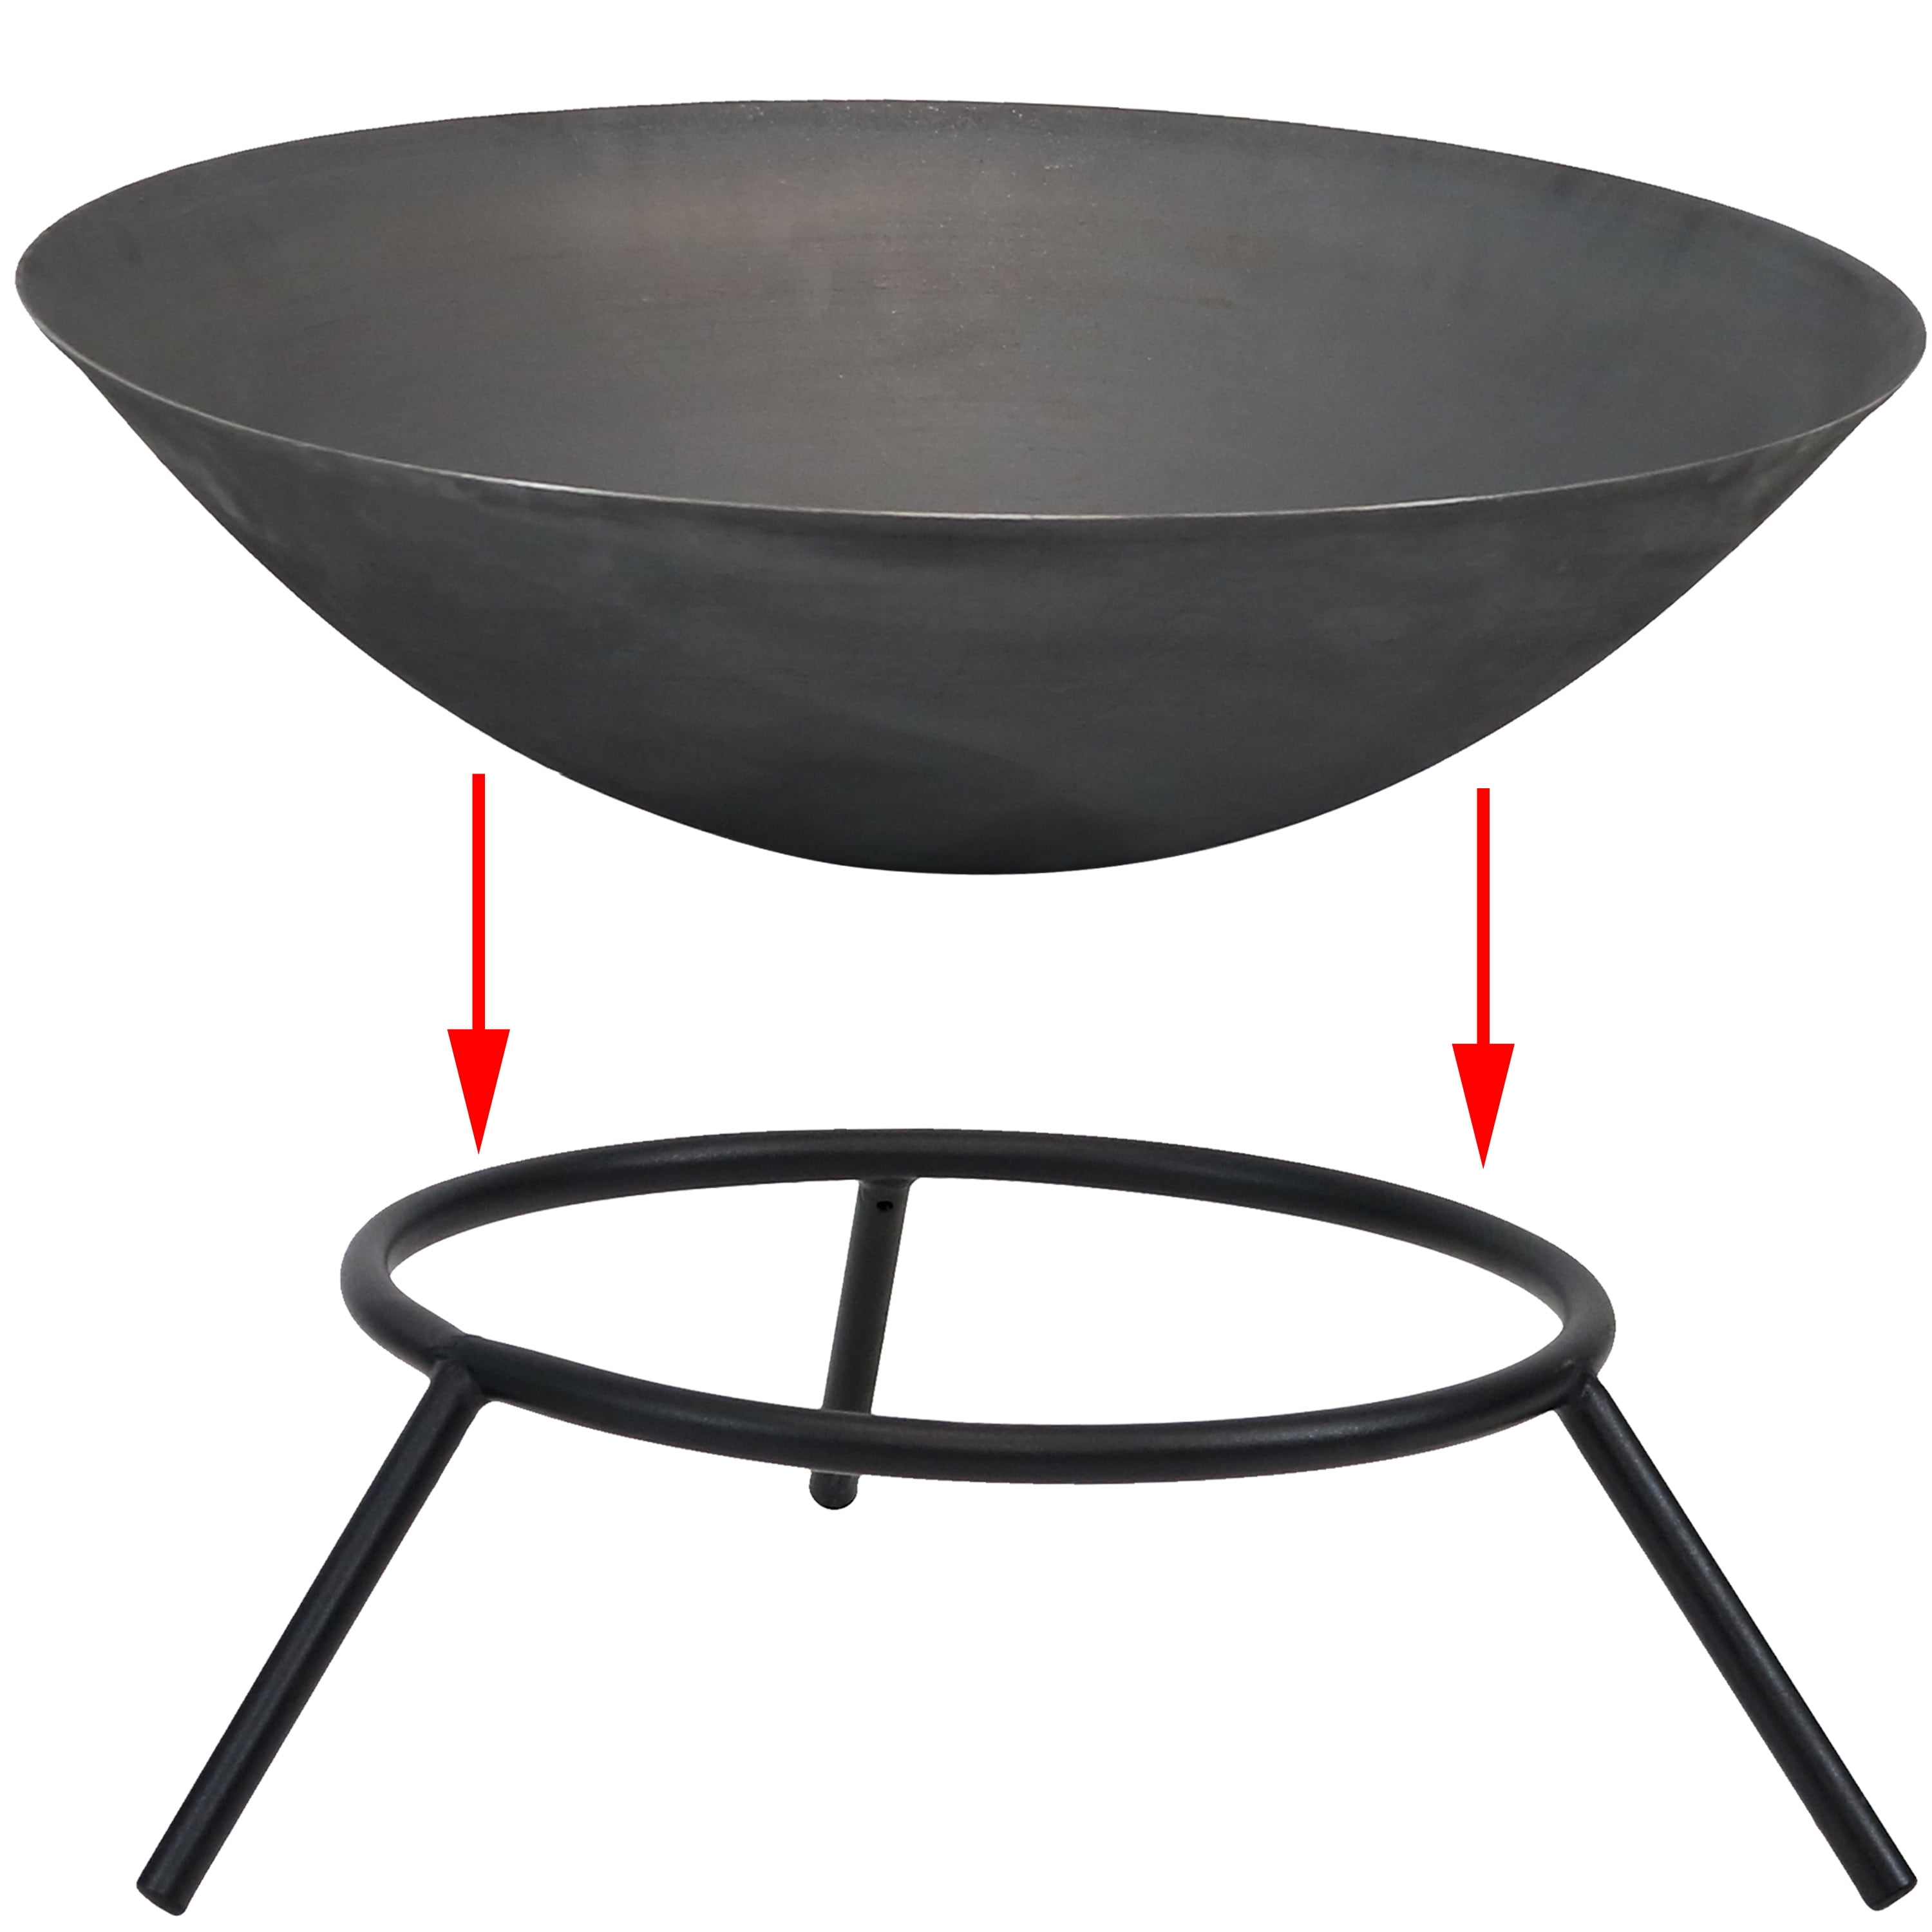 Sunnydaze Modern Cast Iron Fire Pit Bowl with Stand - 23 Diameter